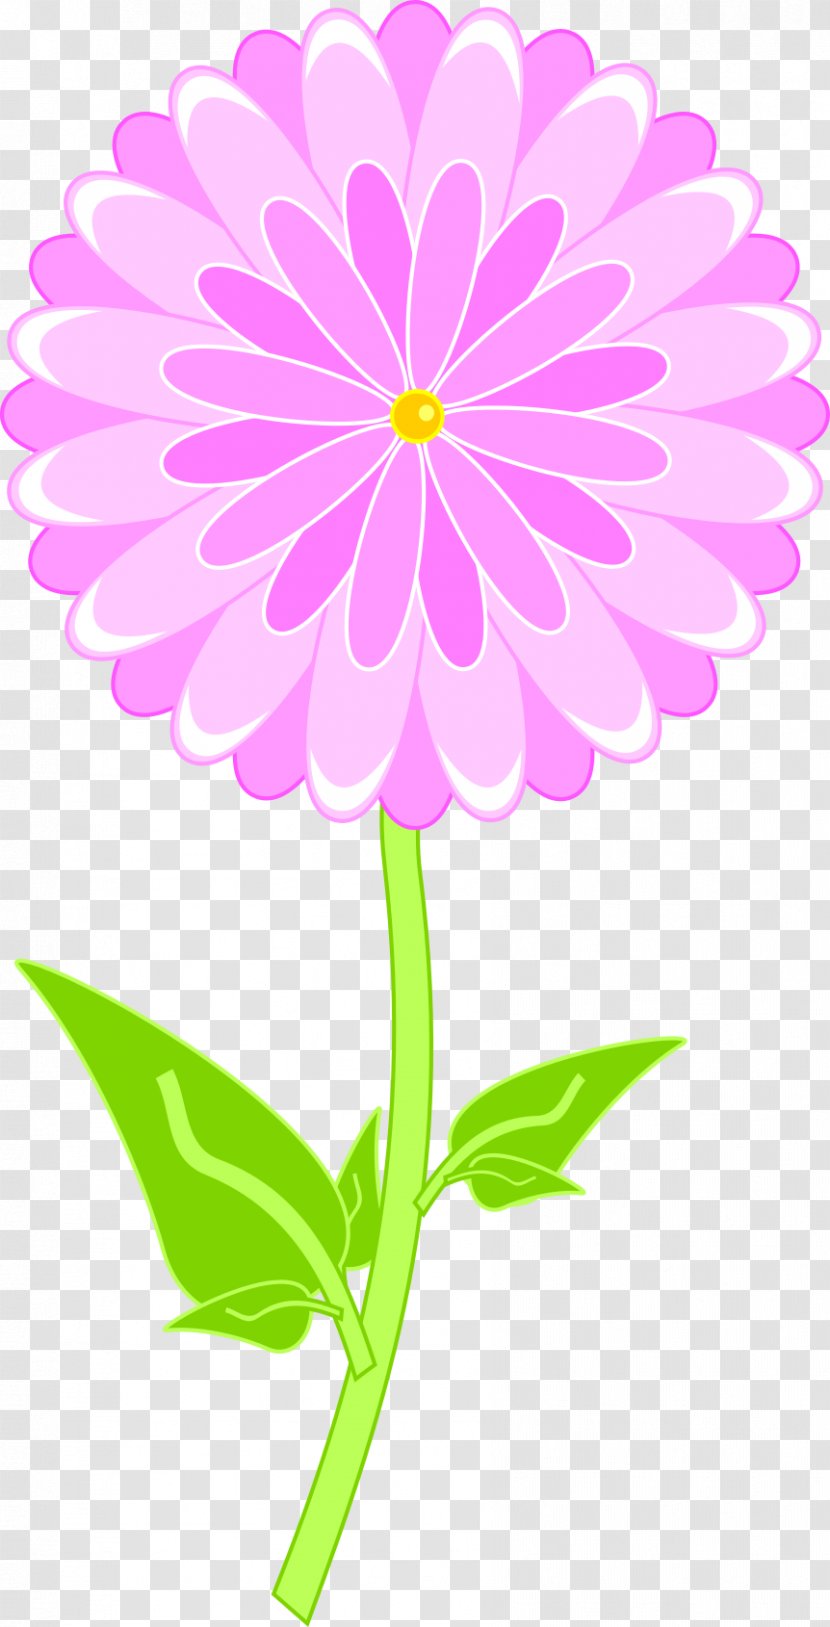 Gbpou Sportivno-Pedagogicheskiy Kolledzh Moskomsporta Burleson Clip Art - Plant Stem - Pink Flower Transparent PNG